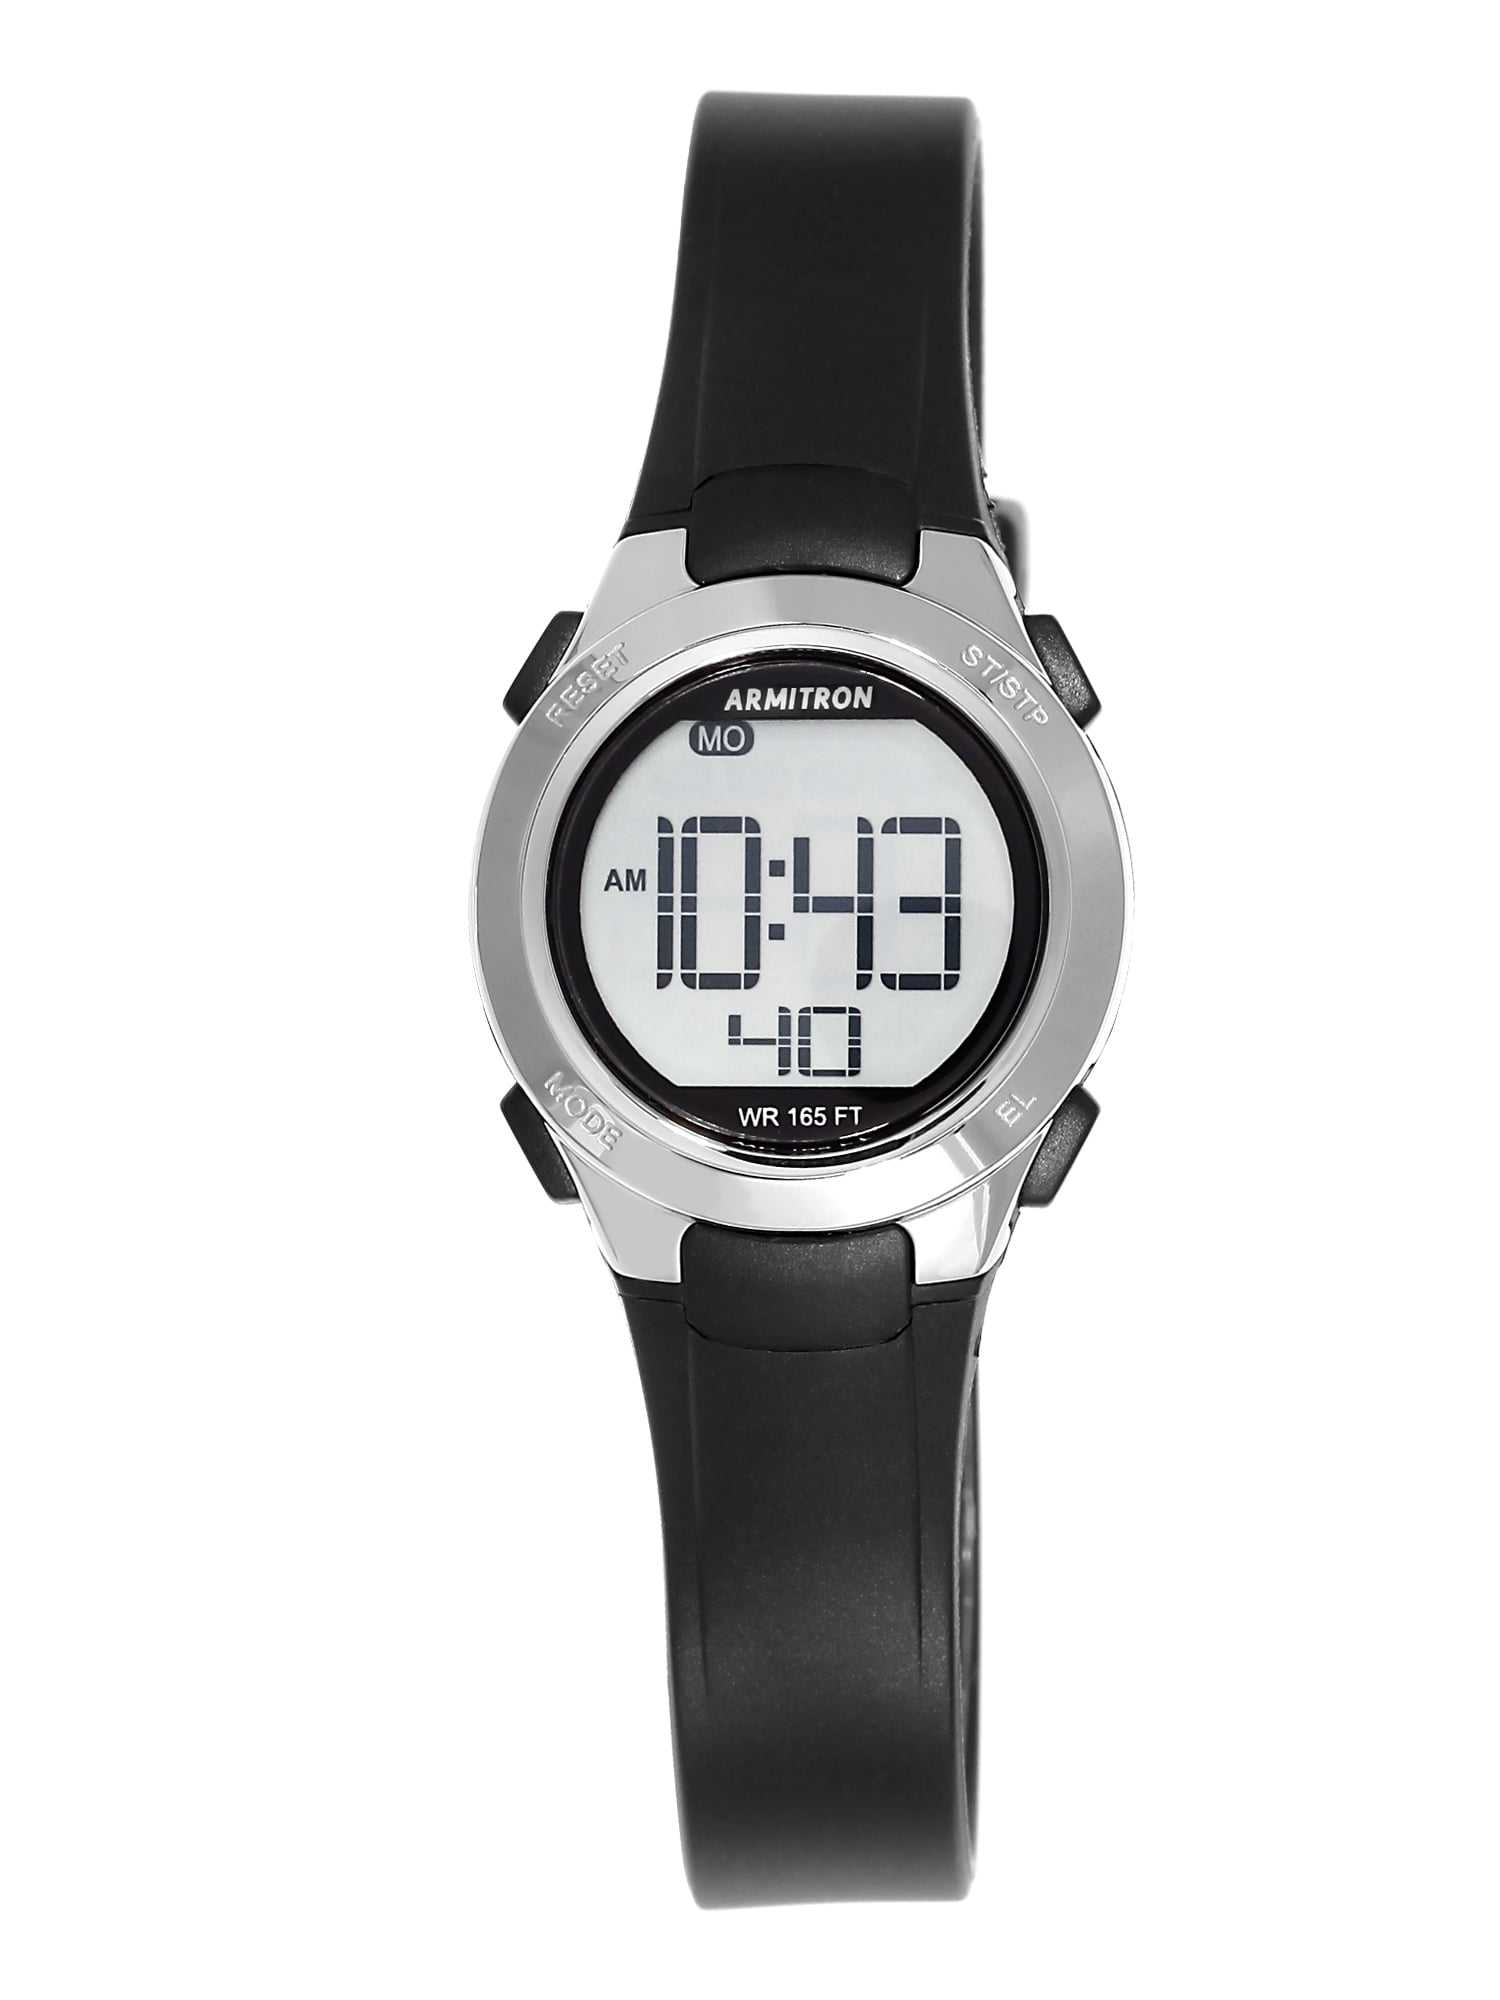 adjust time on armitron watch